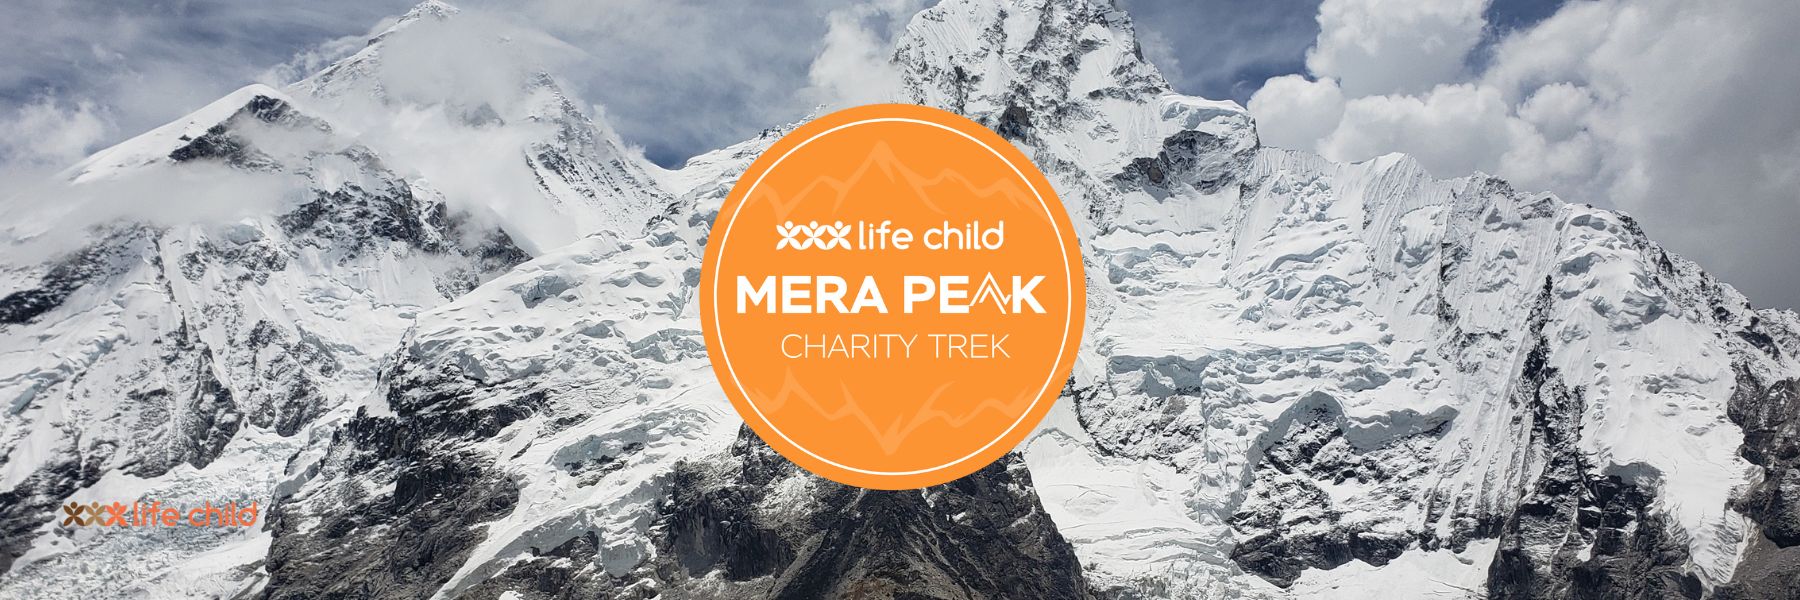 Mera Peak charity trek